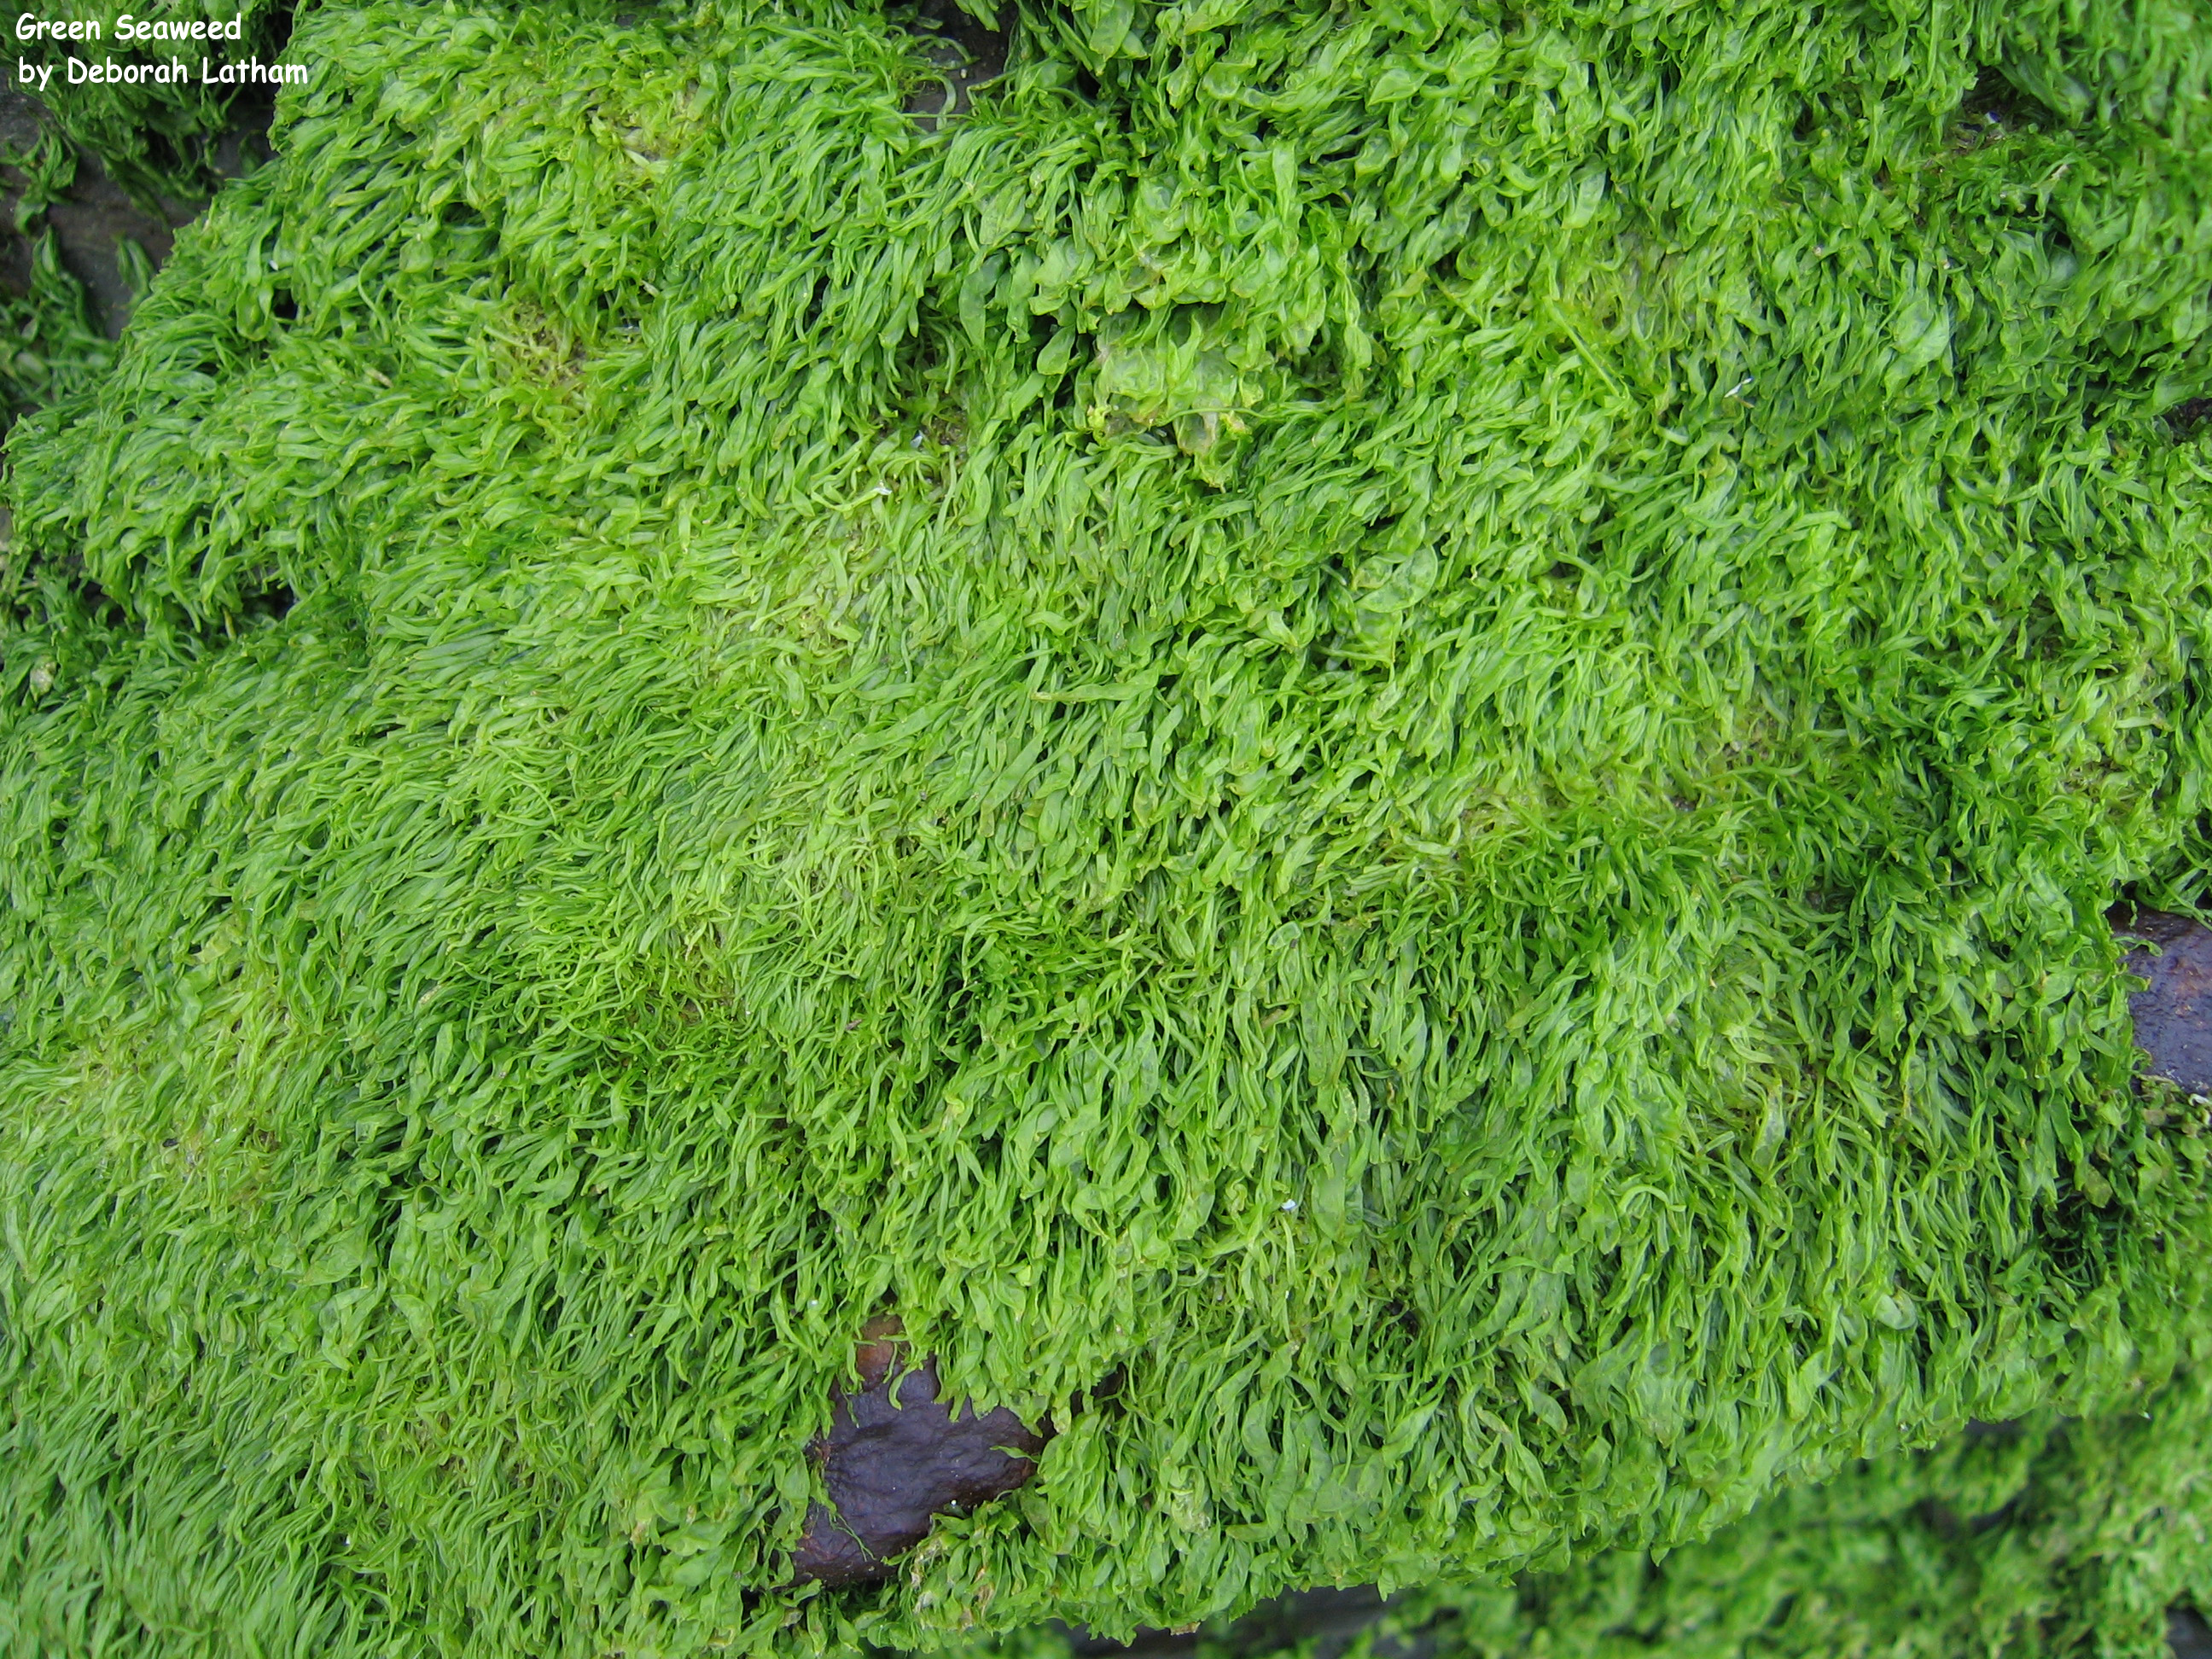 Green Seaweed: NEN Gallery